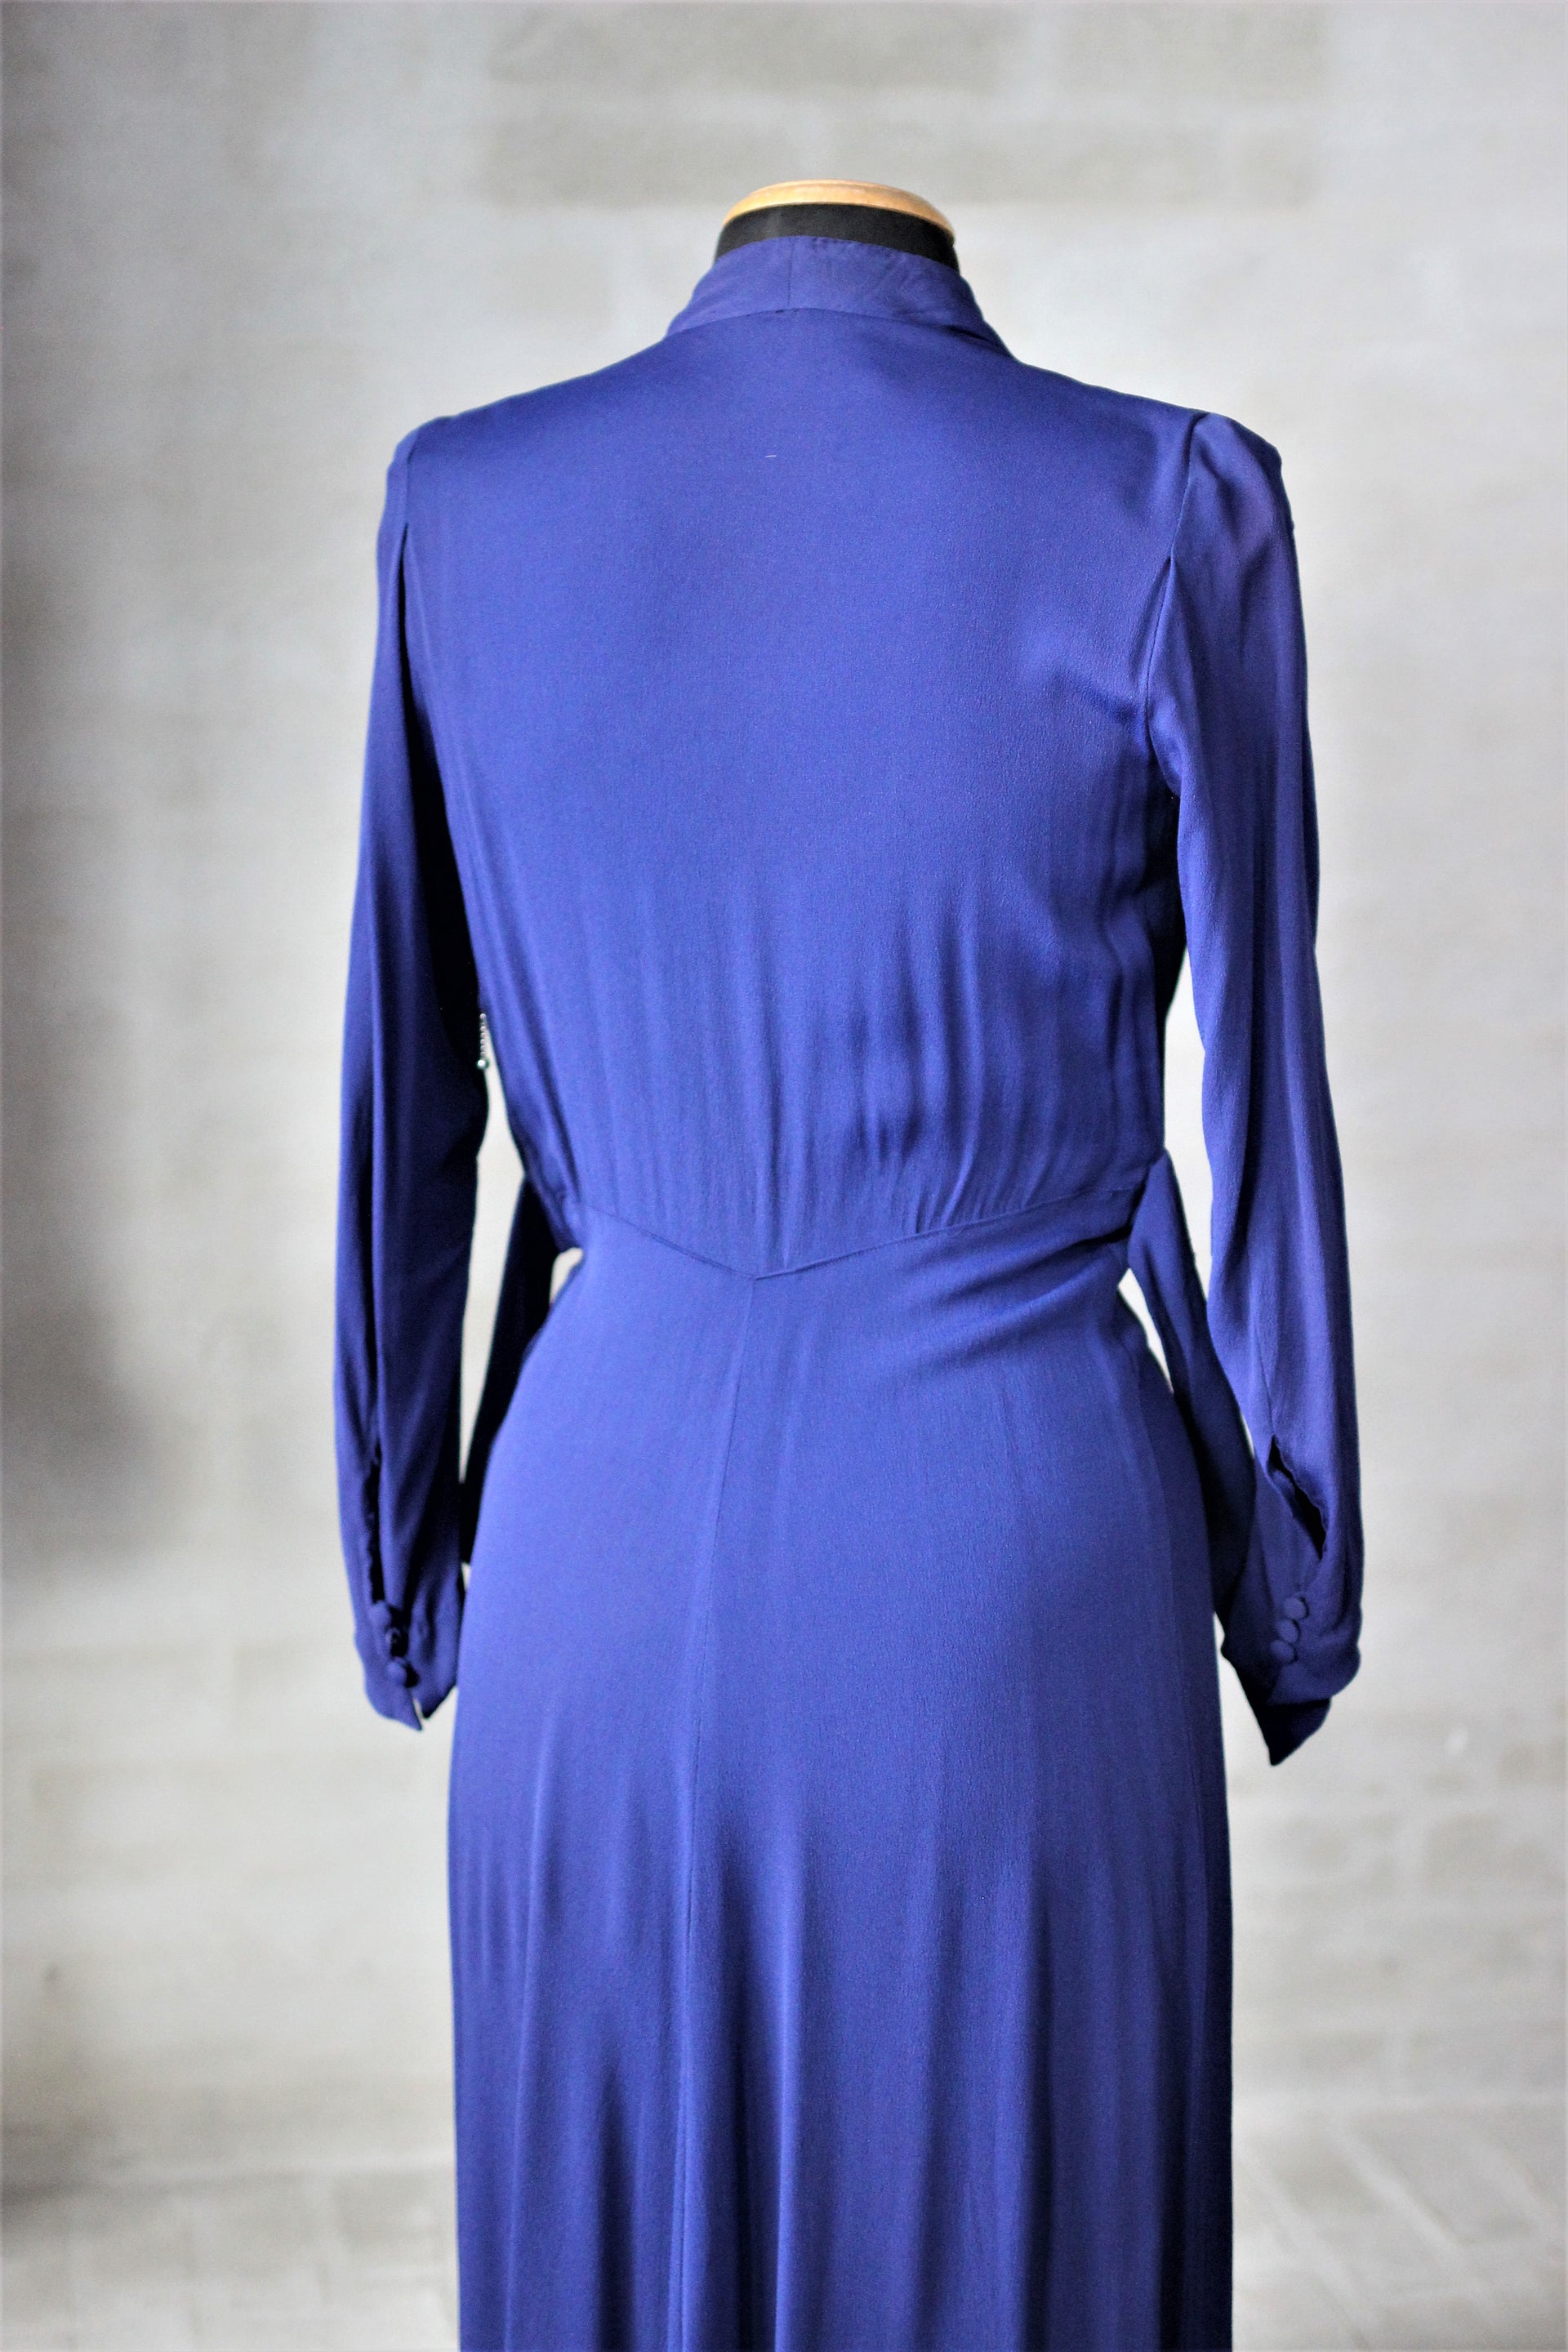 1940s Dark Purple Dress with Drapes//Size M